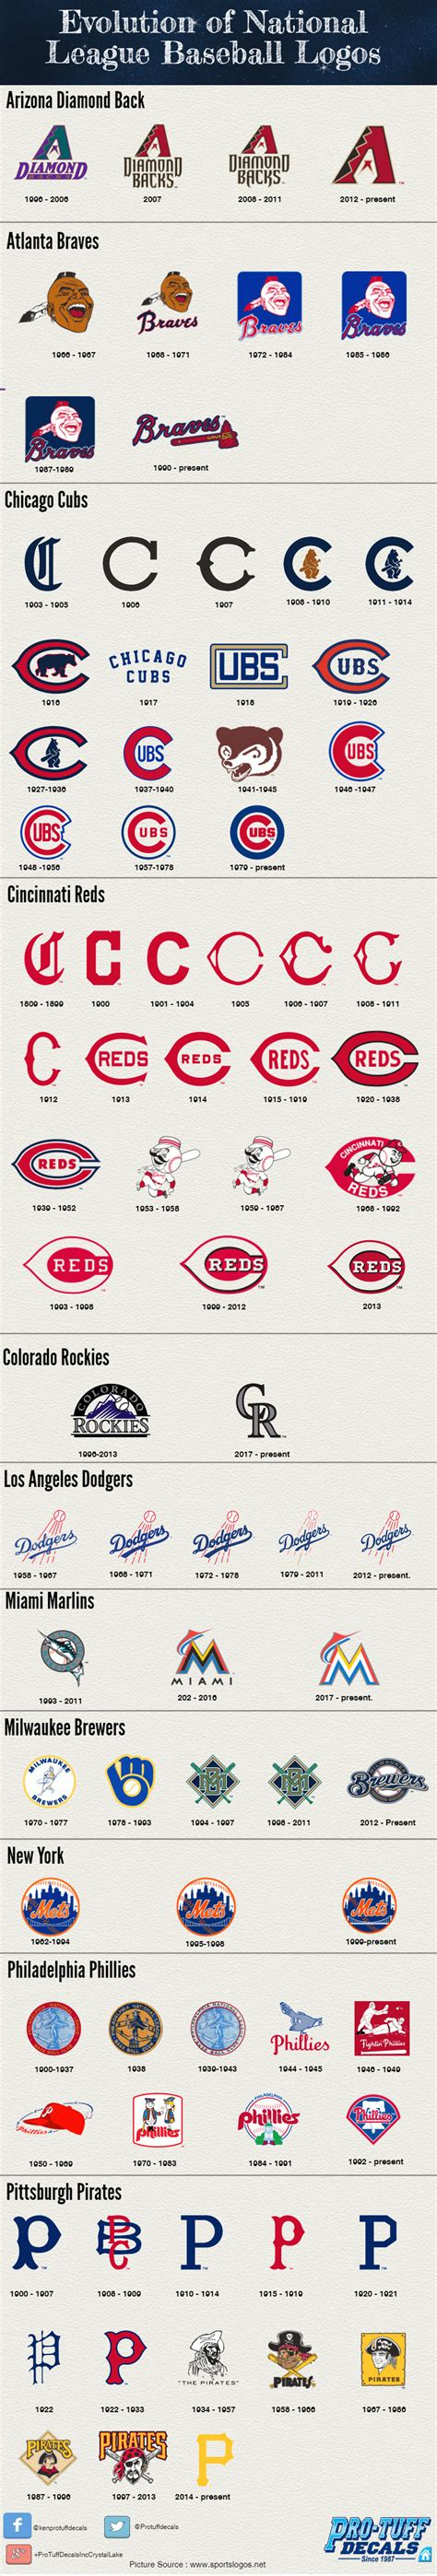 evolution  national league baseball logos infographic